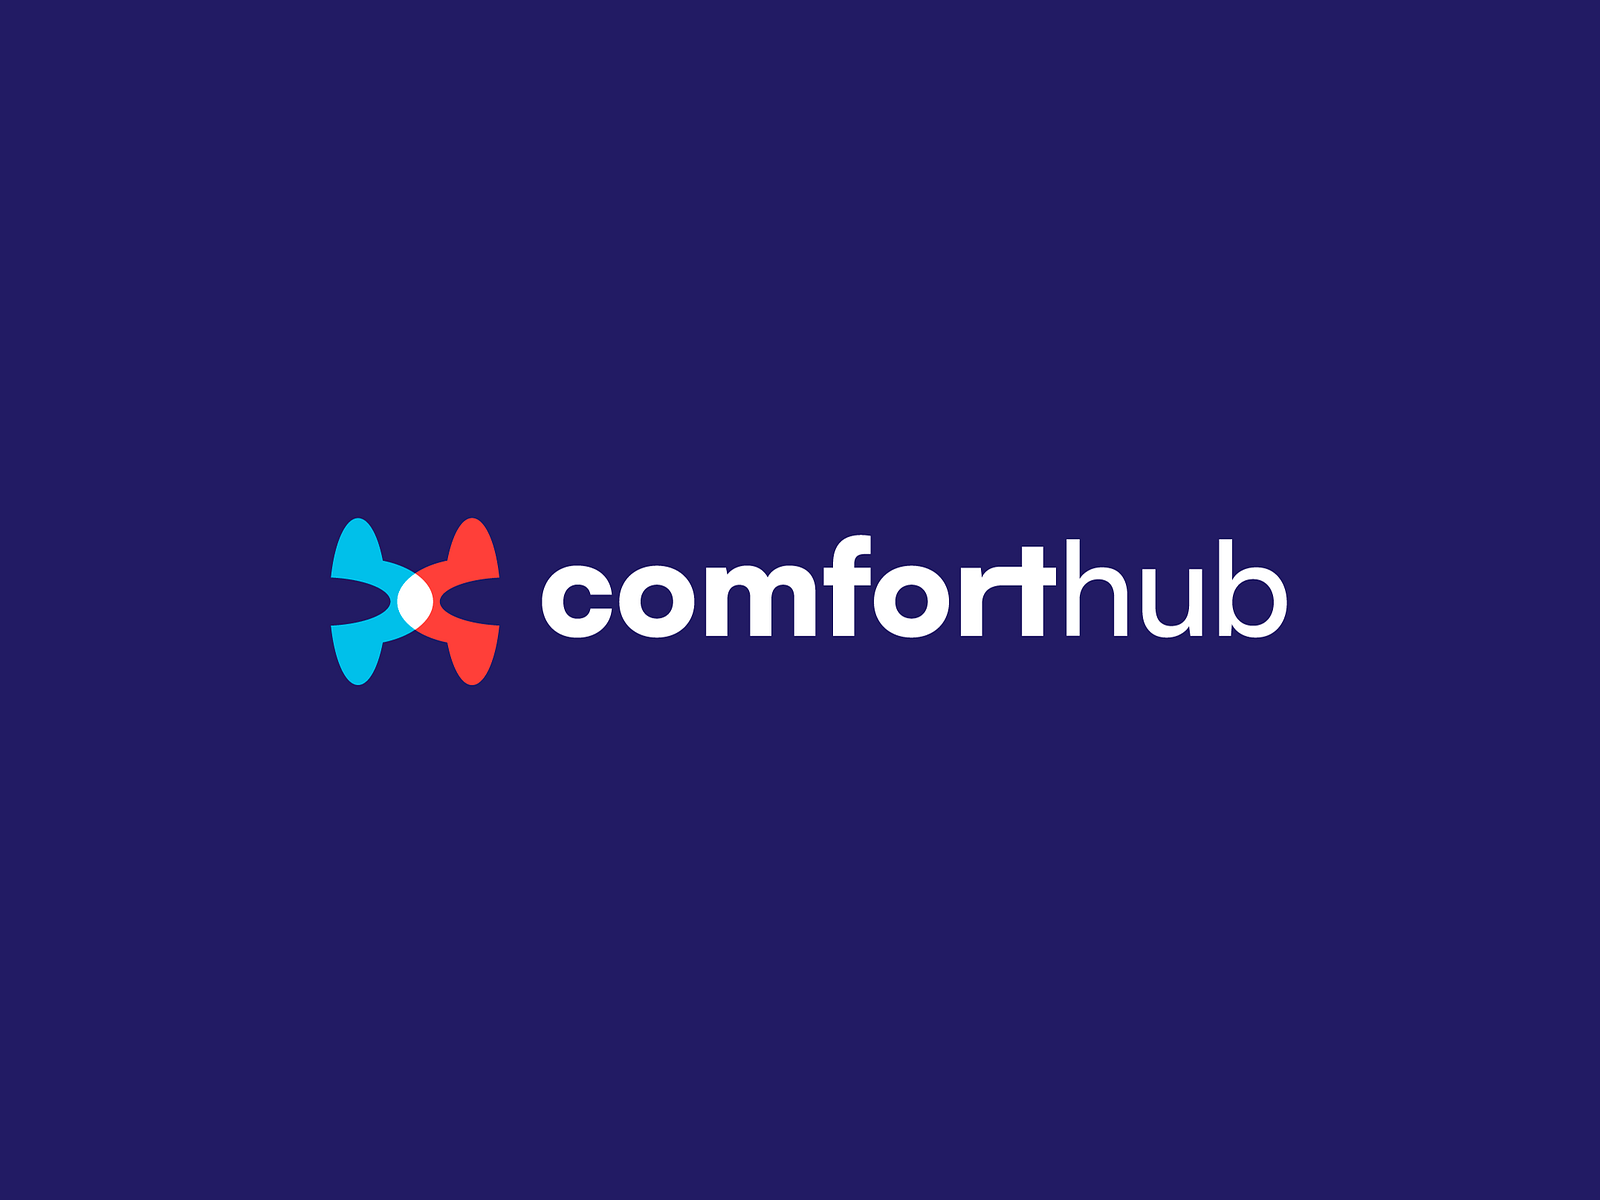 comfort hub by Roxana Niculescu on Dribbble